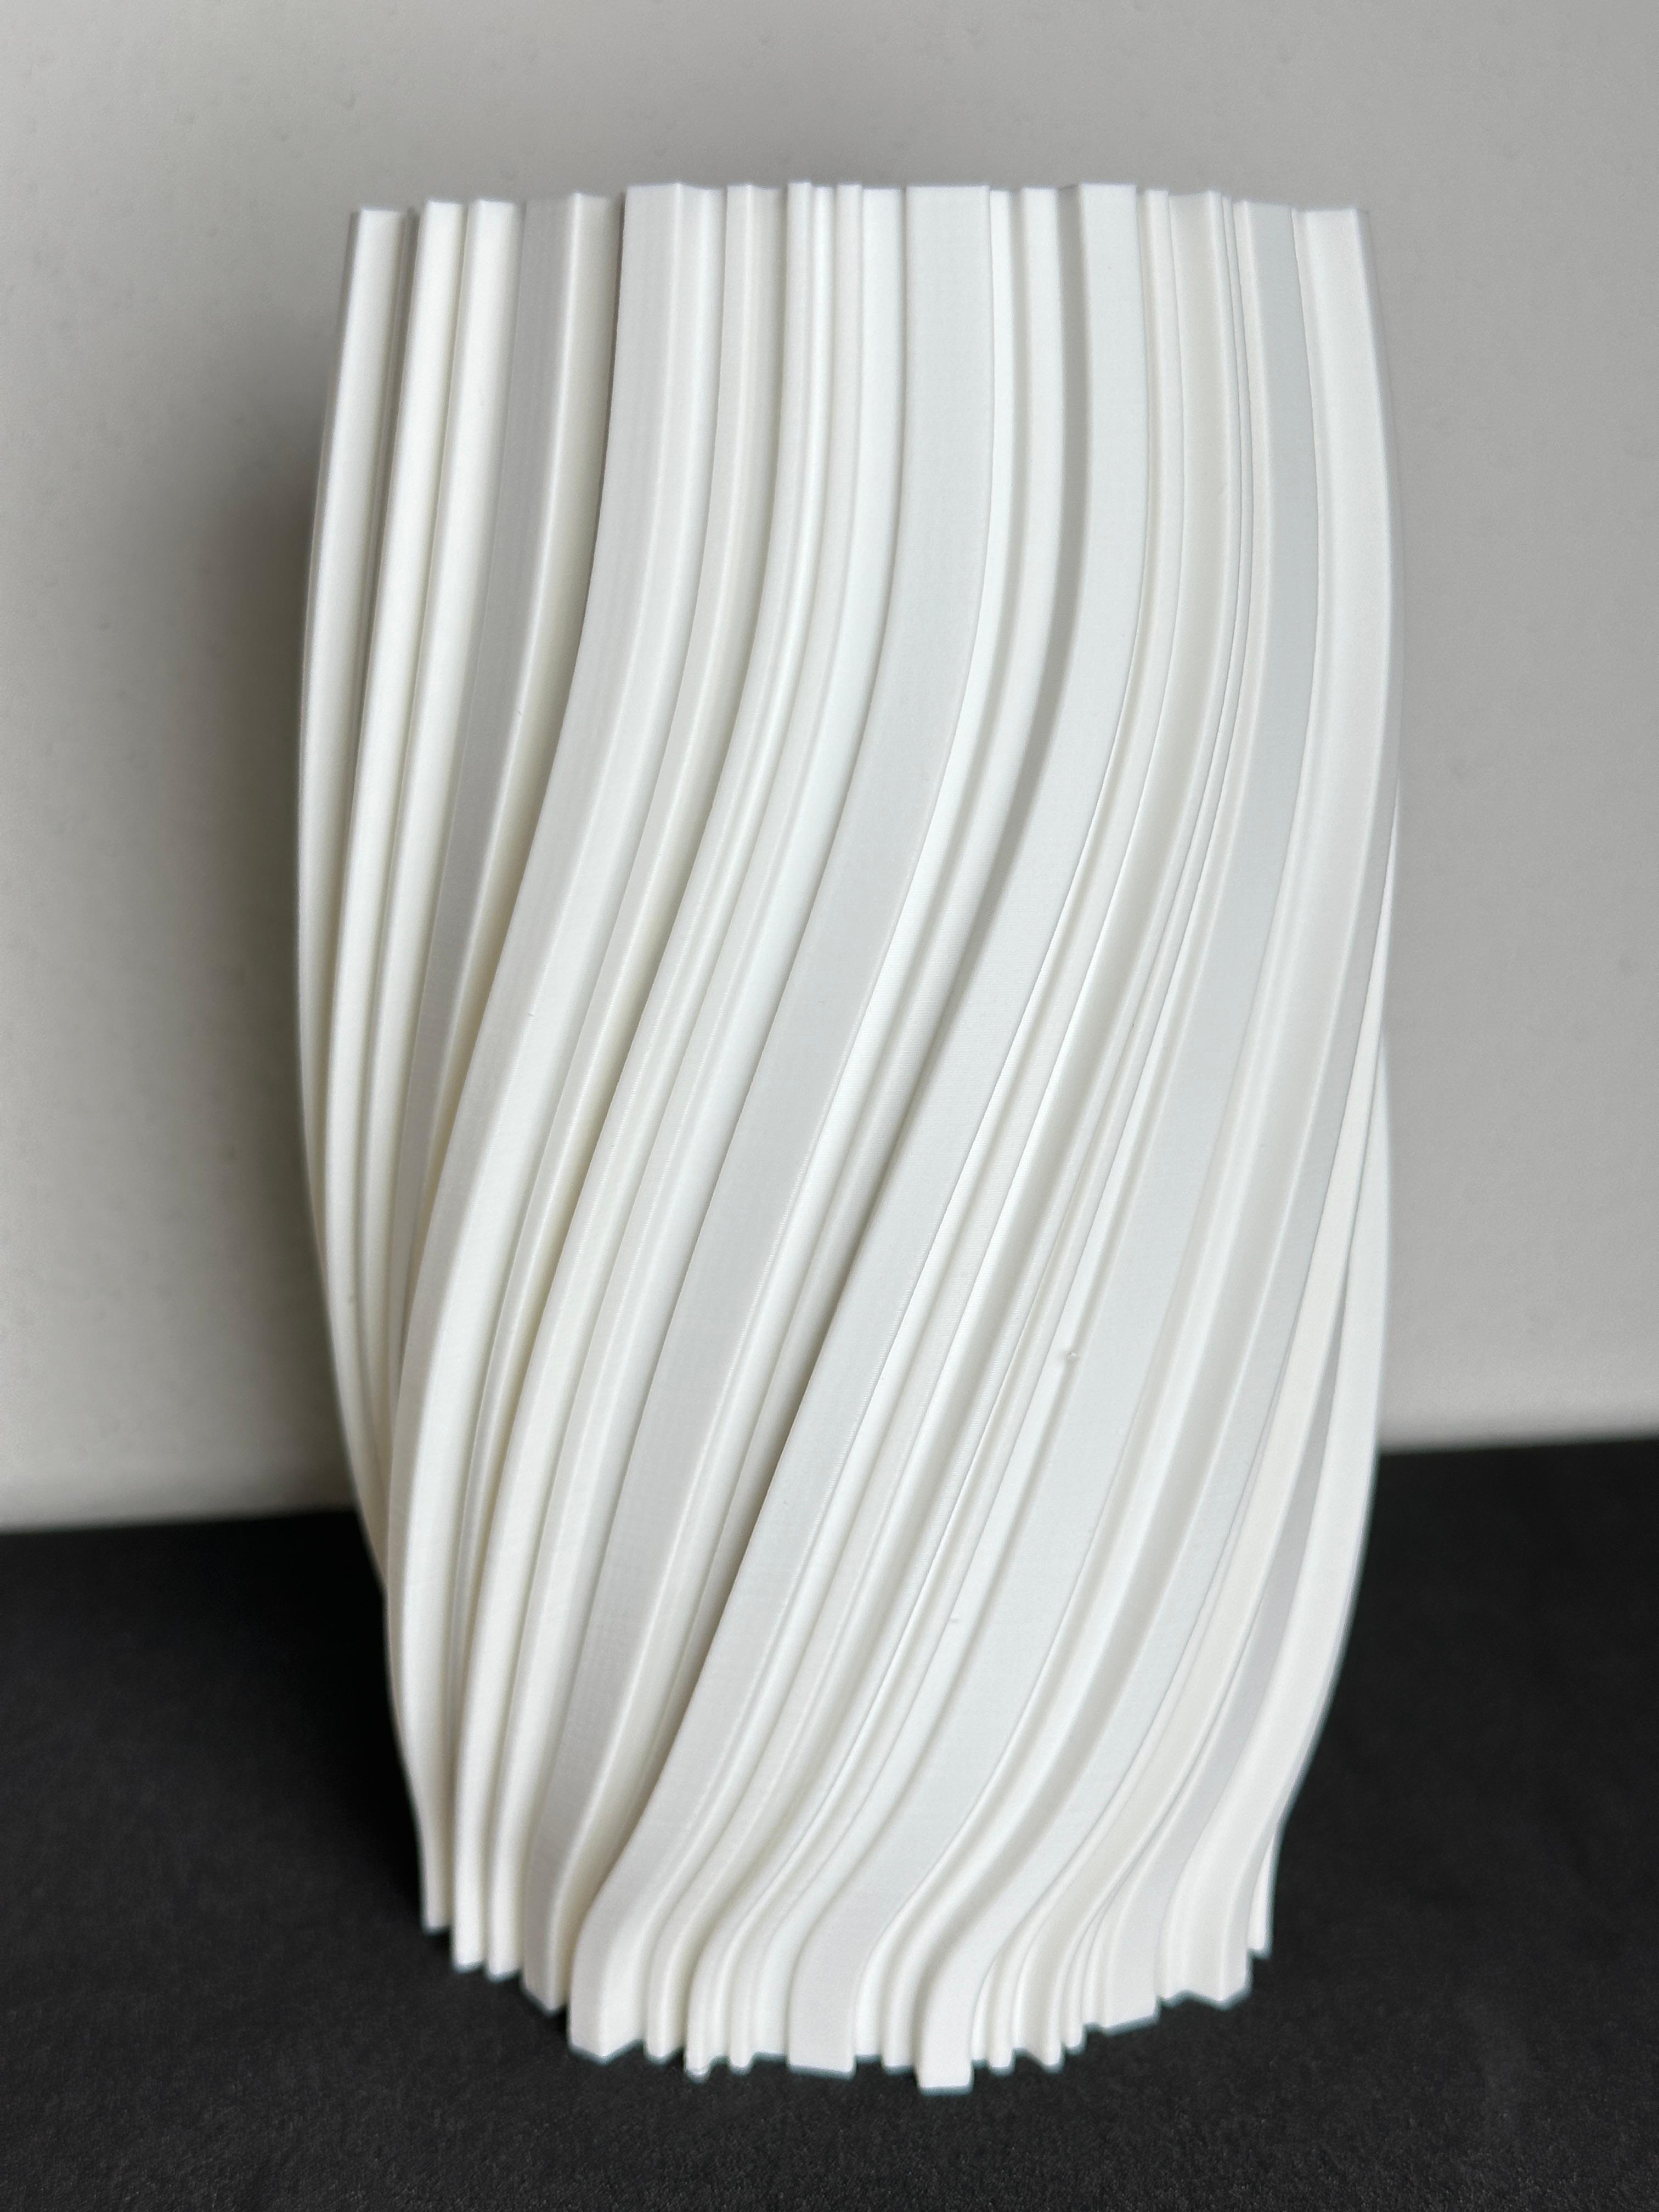 The Frasta - Botany Chic Vase Frasta - Transform the Ordinary 3d model